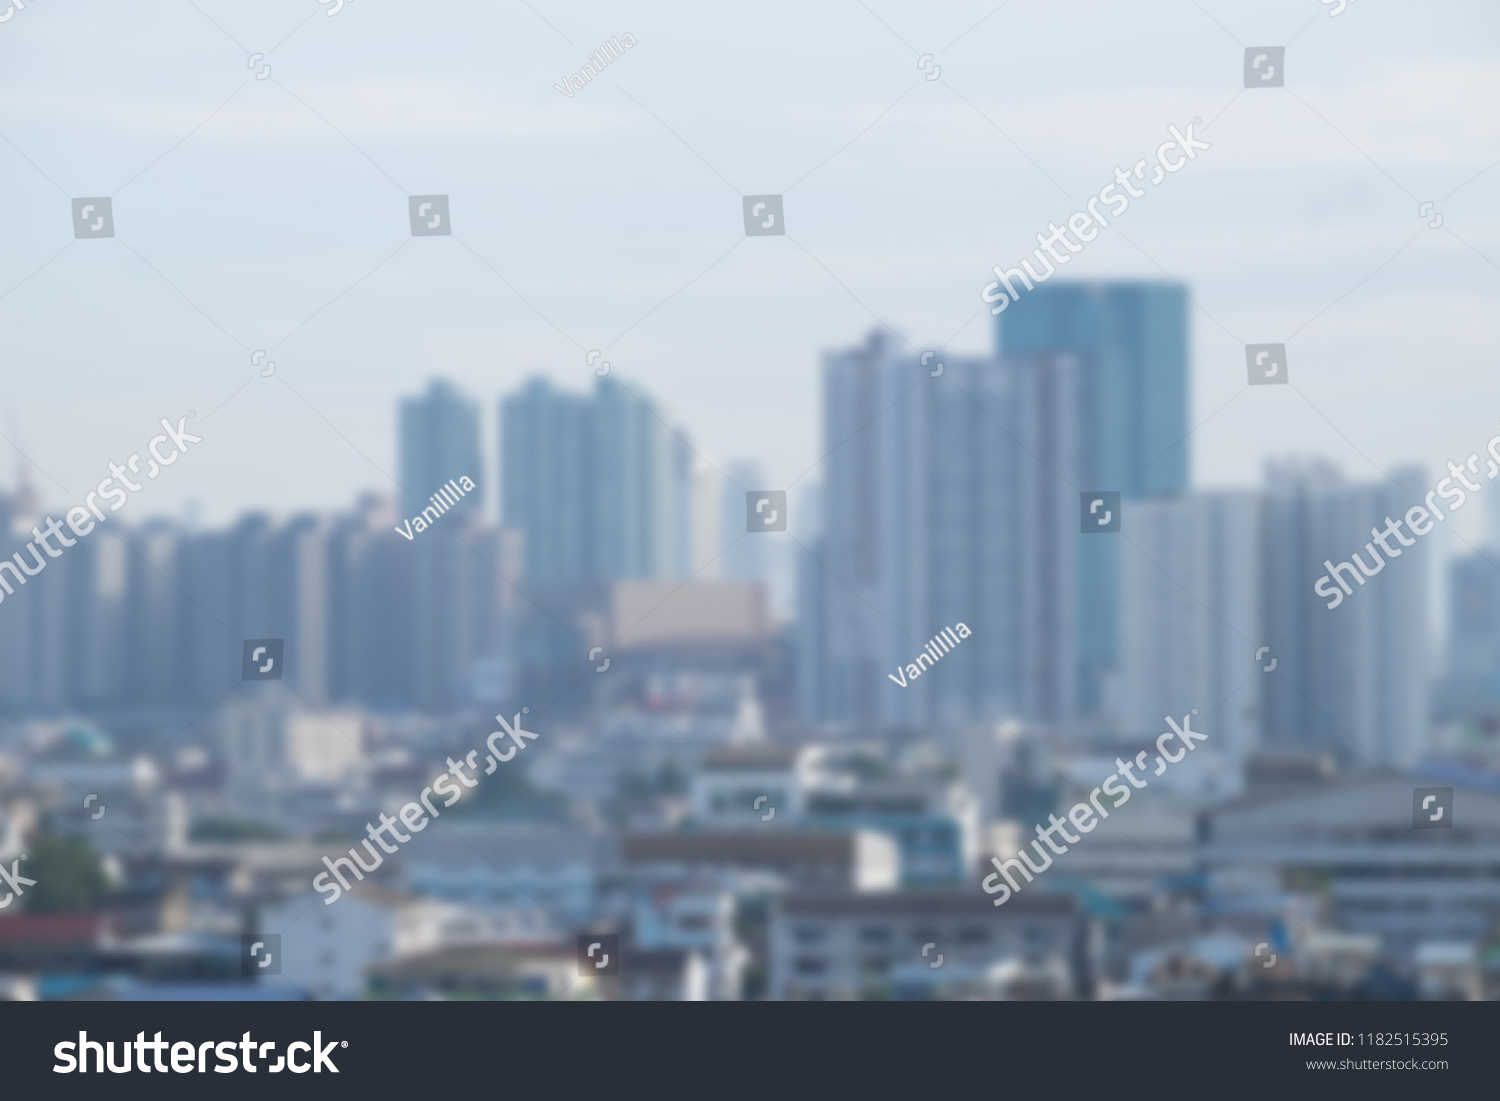 Blur background of skyscraper building condominium apartment office and residential in big city. #1182515395